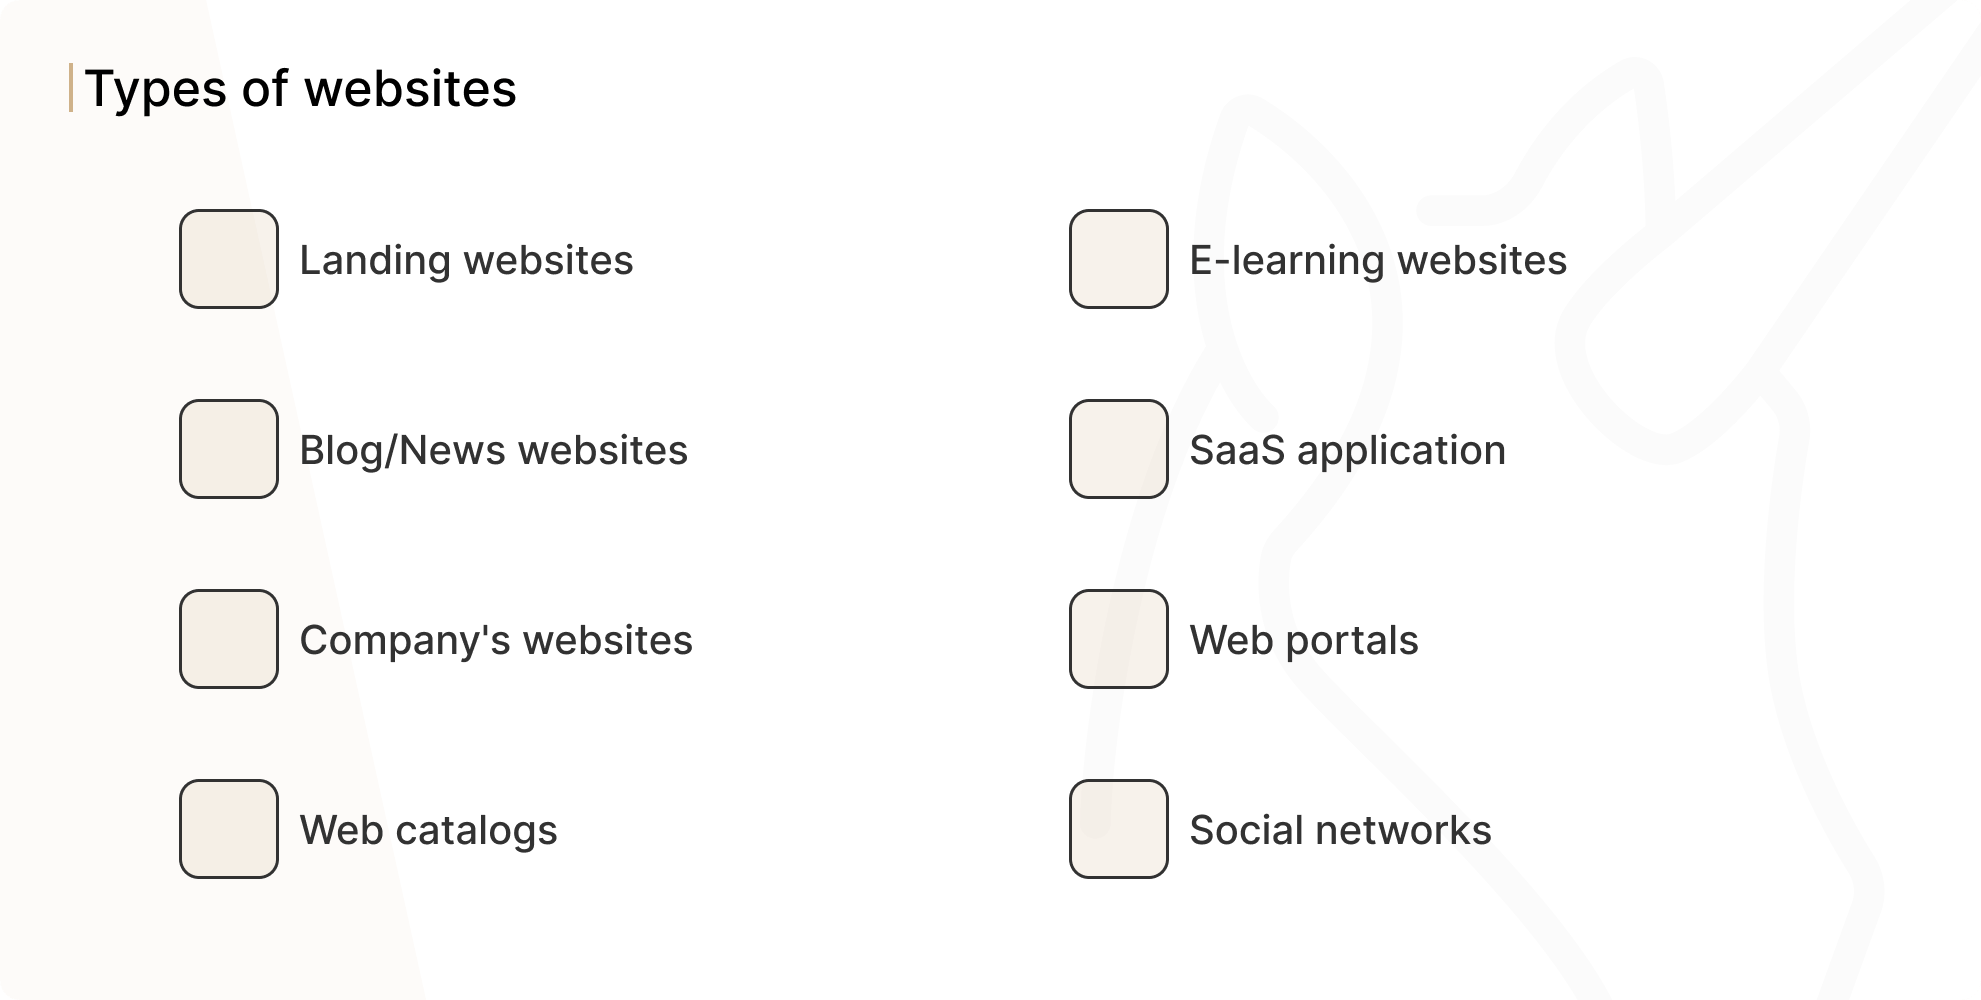 Types of websites